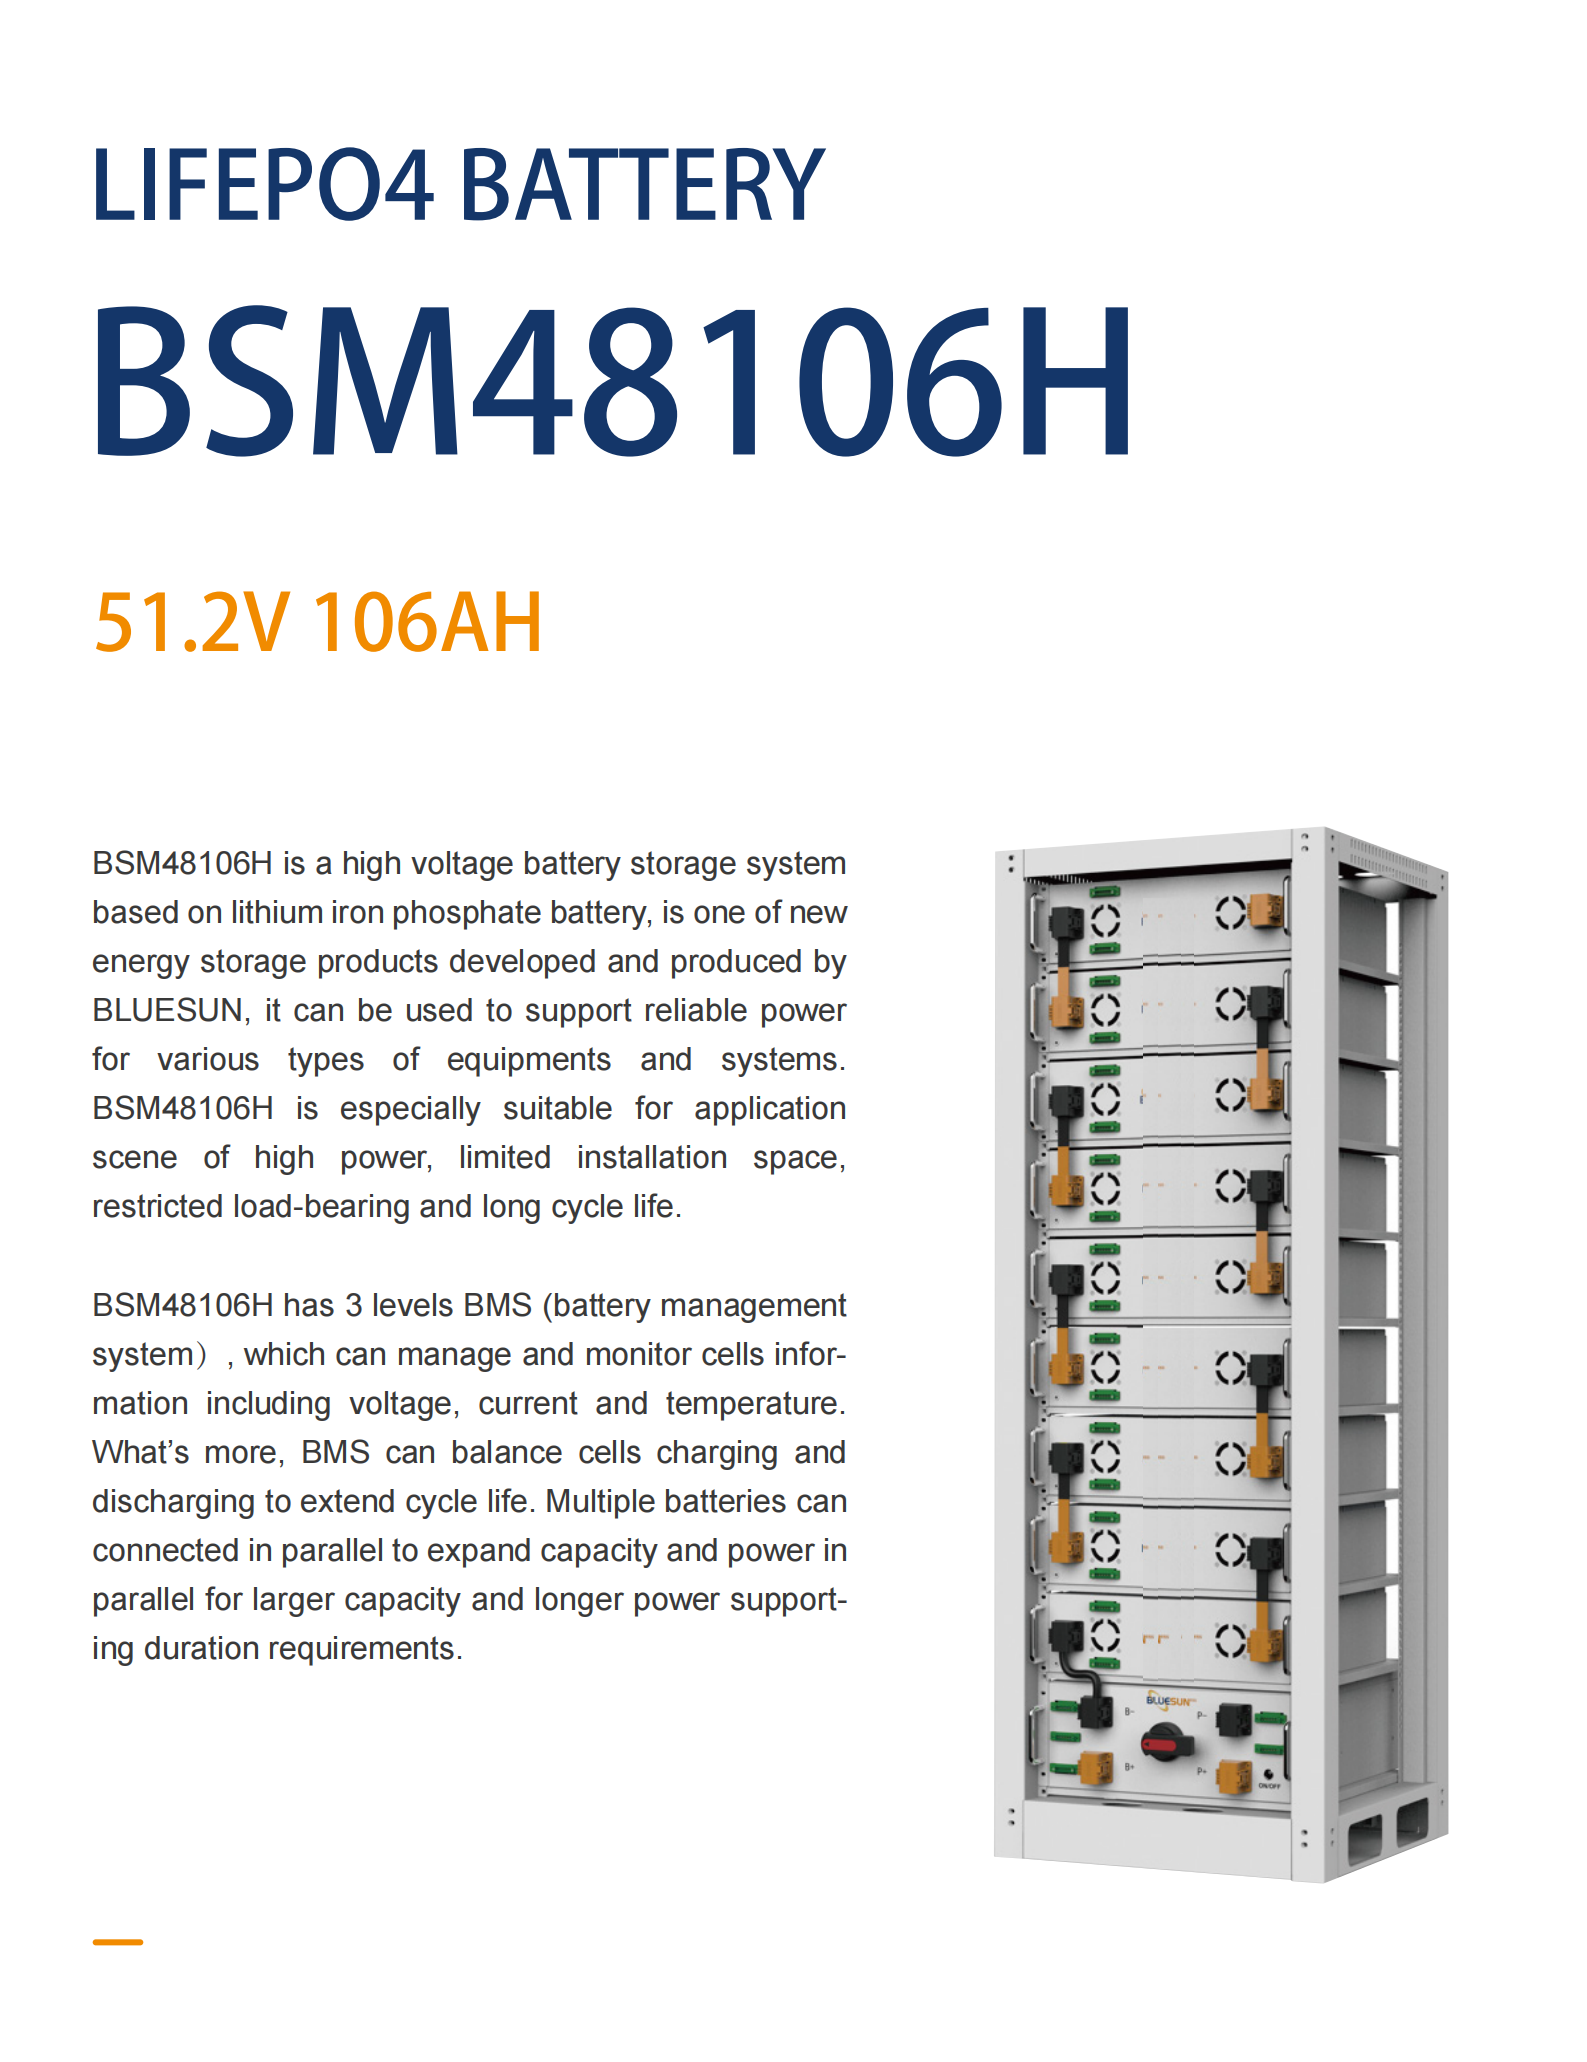 BSM48106H Rack 51.2V 106AH